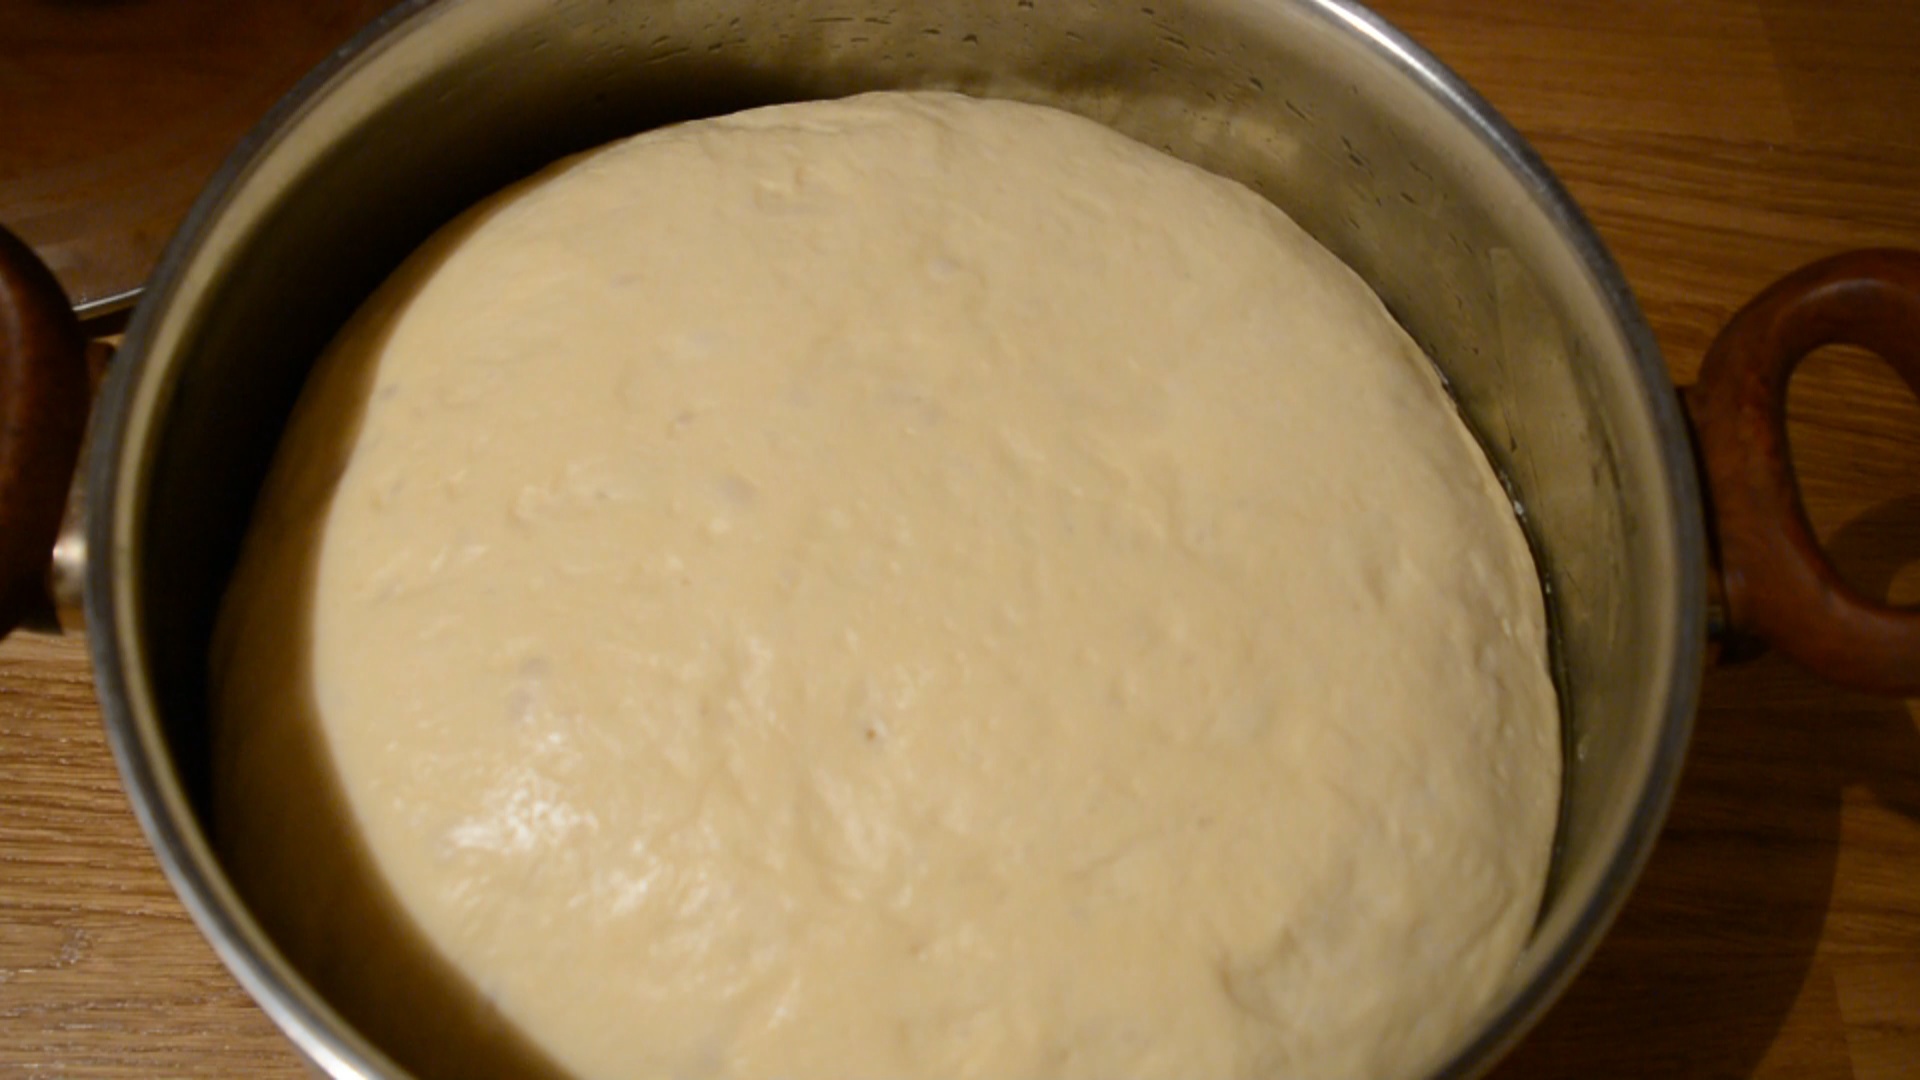 Как разморозить тесто дрожжевое. Можно замораживать дрожжевое тесто. Как разморозить тесто правильно. Как правильно заморозить дрожжевое тесто. Как можно хранить тесто